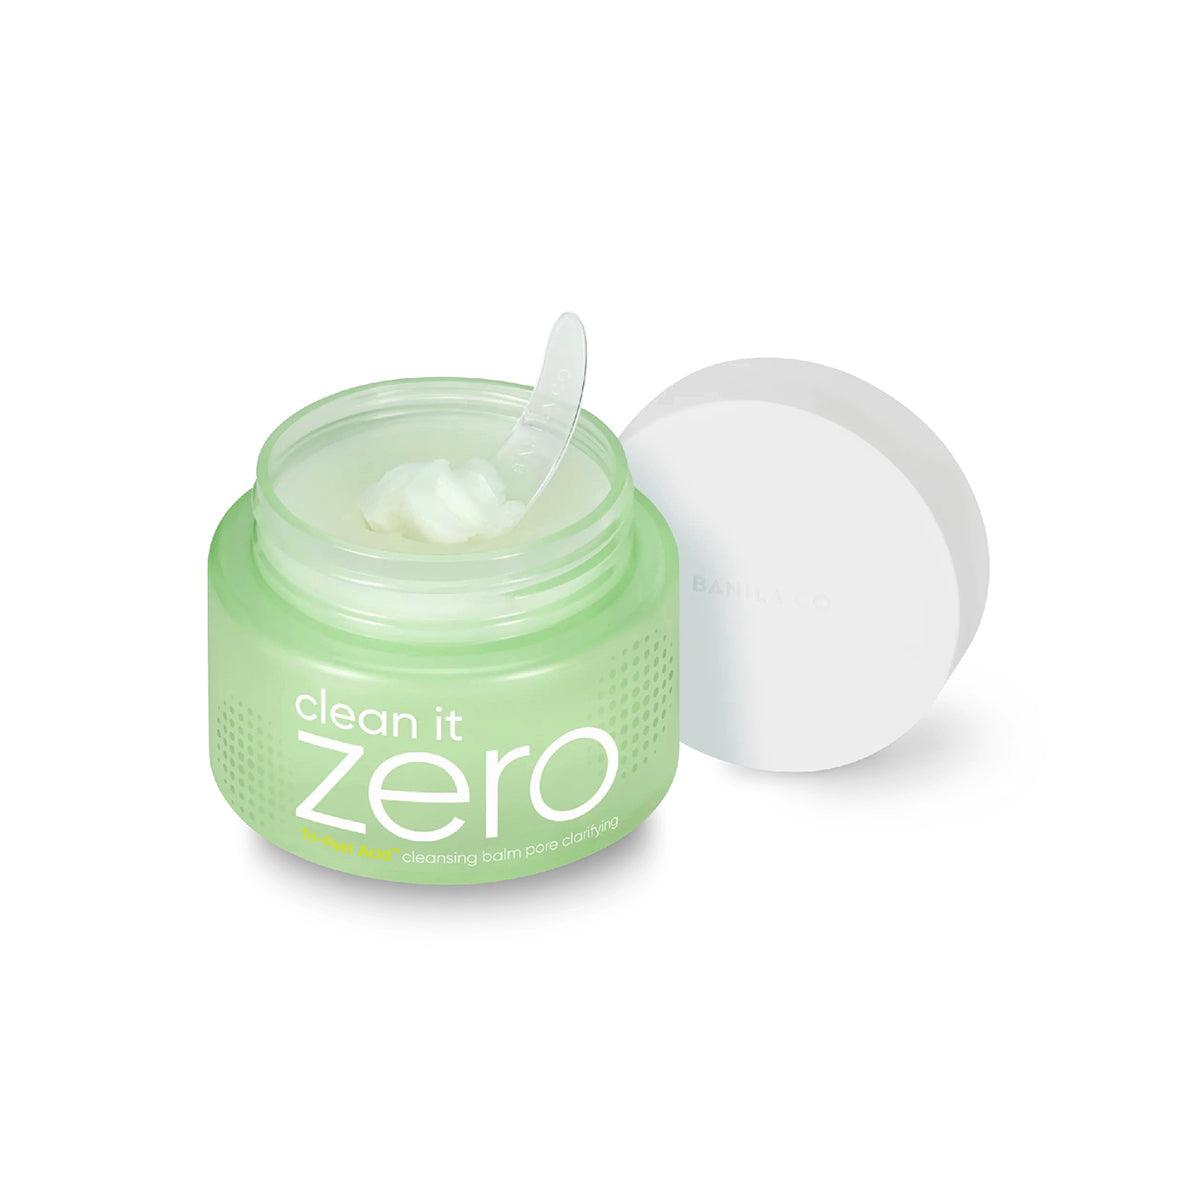 Clean It Zero Cleansing Balm (Pore Clarifying) - 100 ml - K-Beauty Arabia